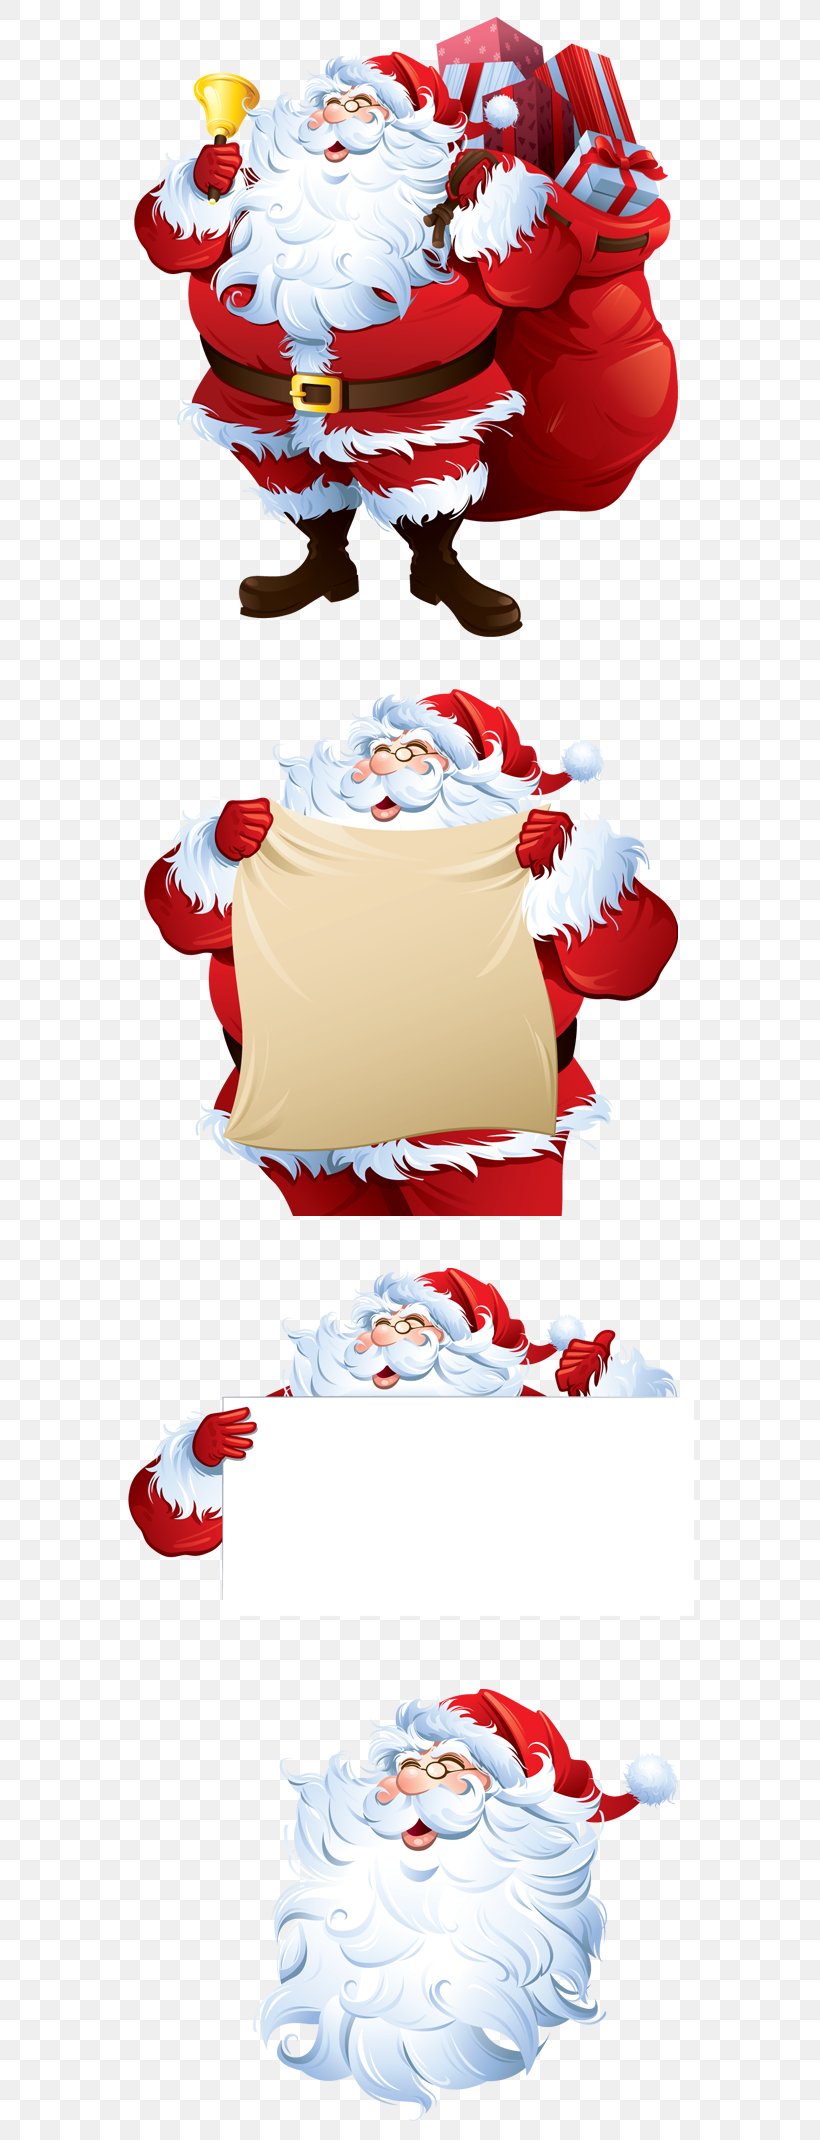 Santa Claus Vector Graphics Christmas Day Image, PNG, 600x2140px, Santa Claus, Art, Cartoon, Christmas Day, Digital Image Download Free